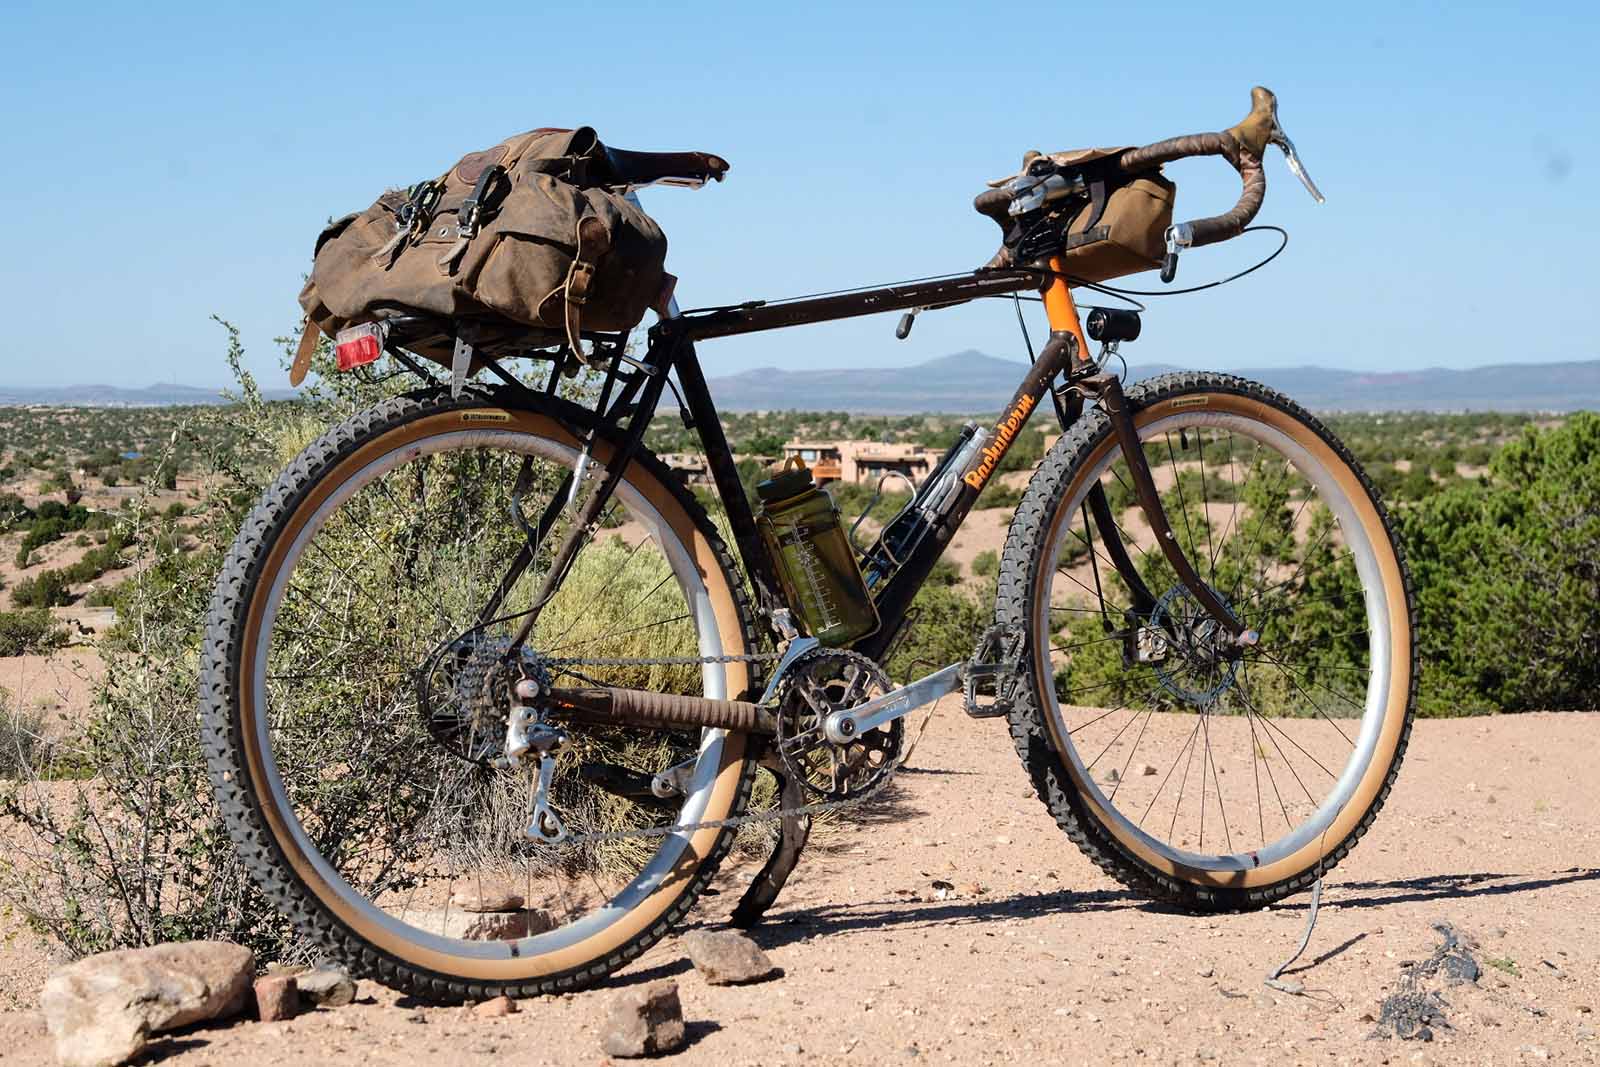 a pachyderm bike against a desert background